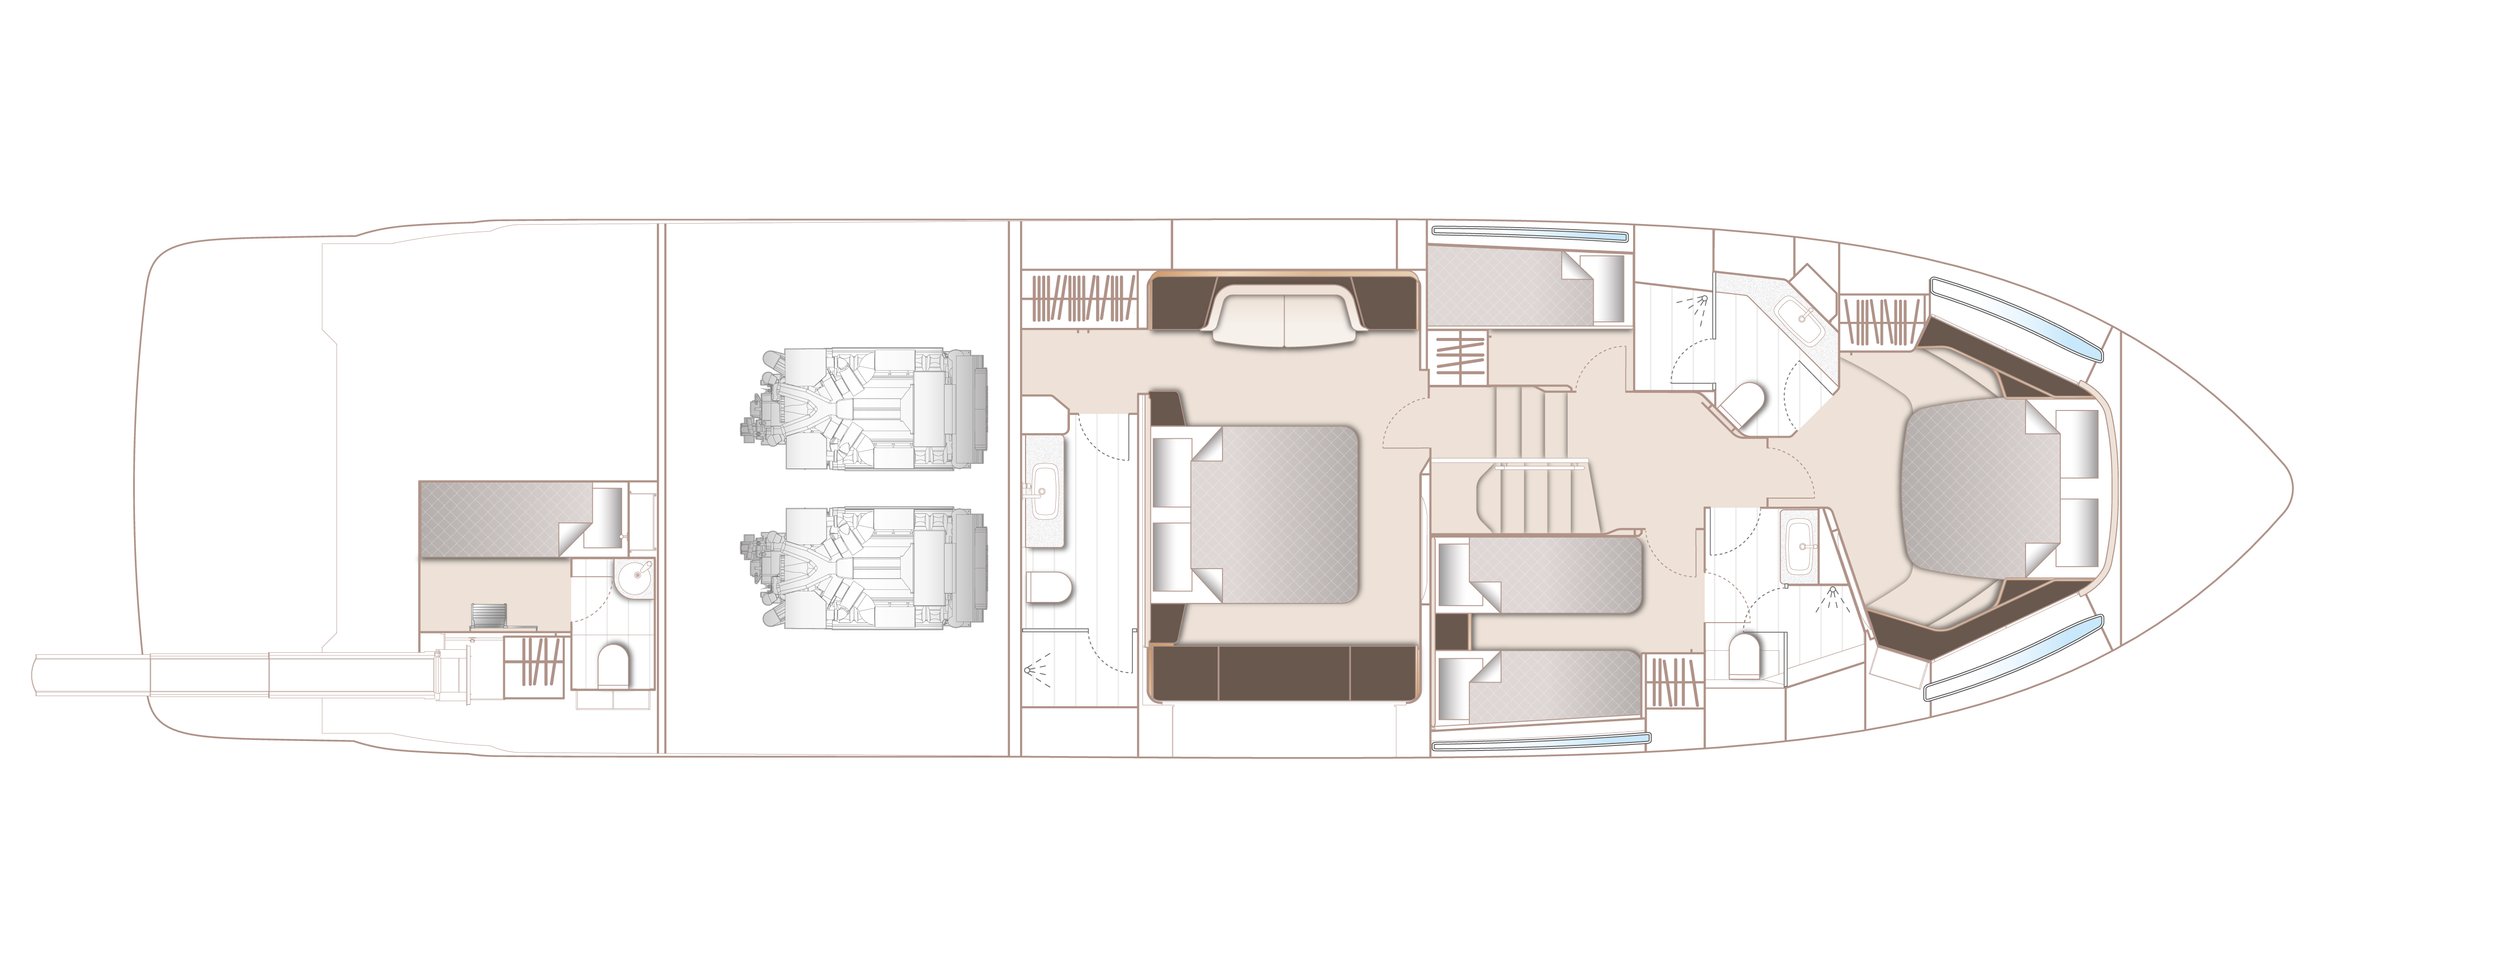 s65-new-lower-deck-layout.jpg